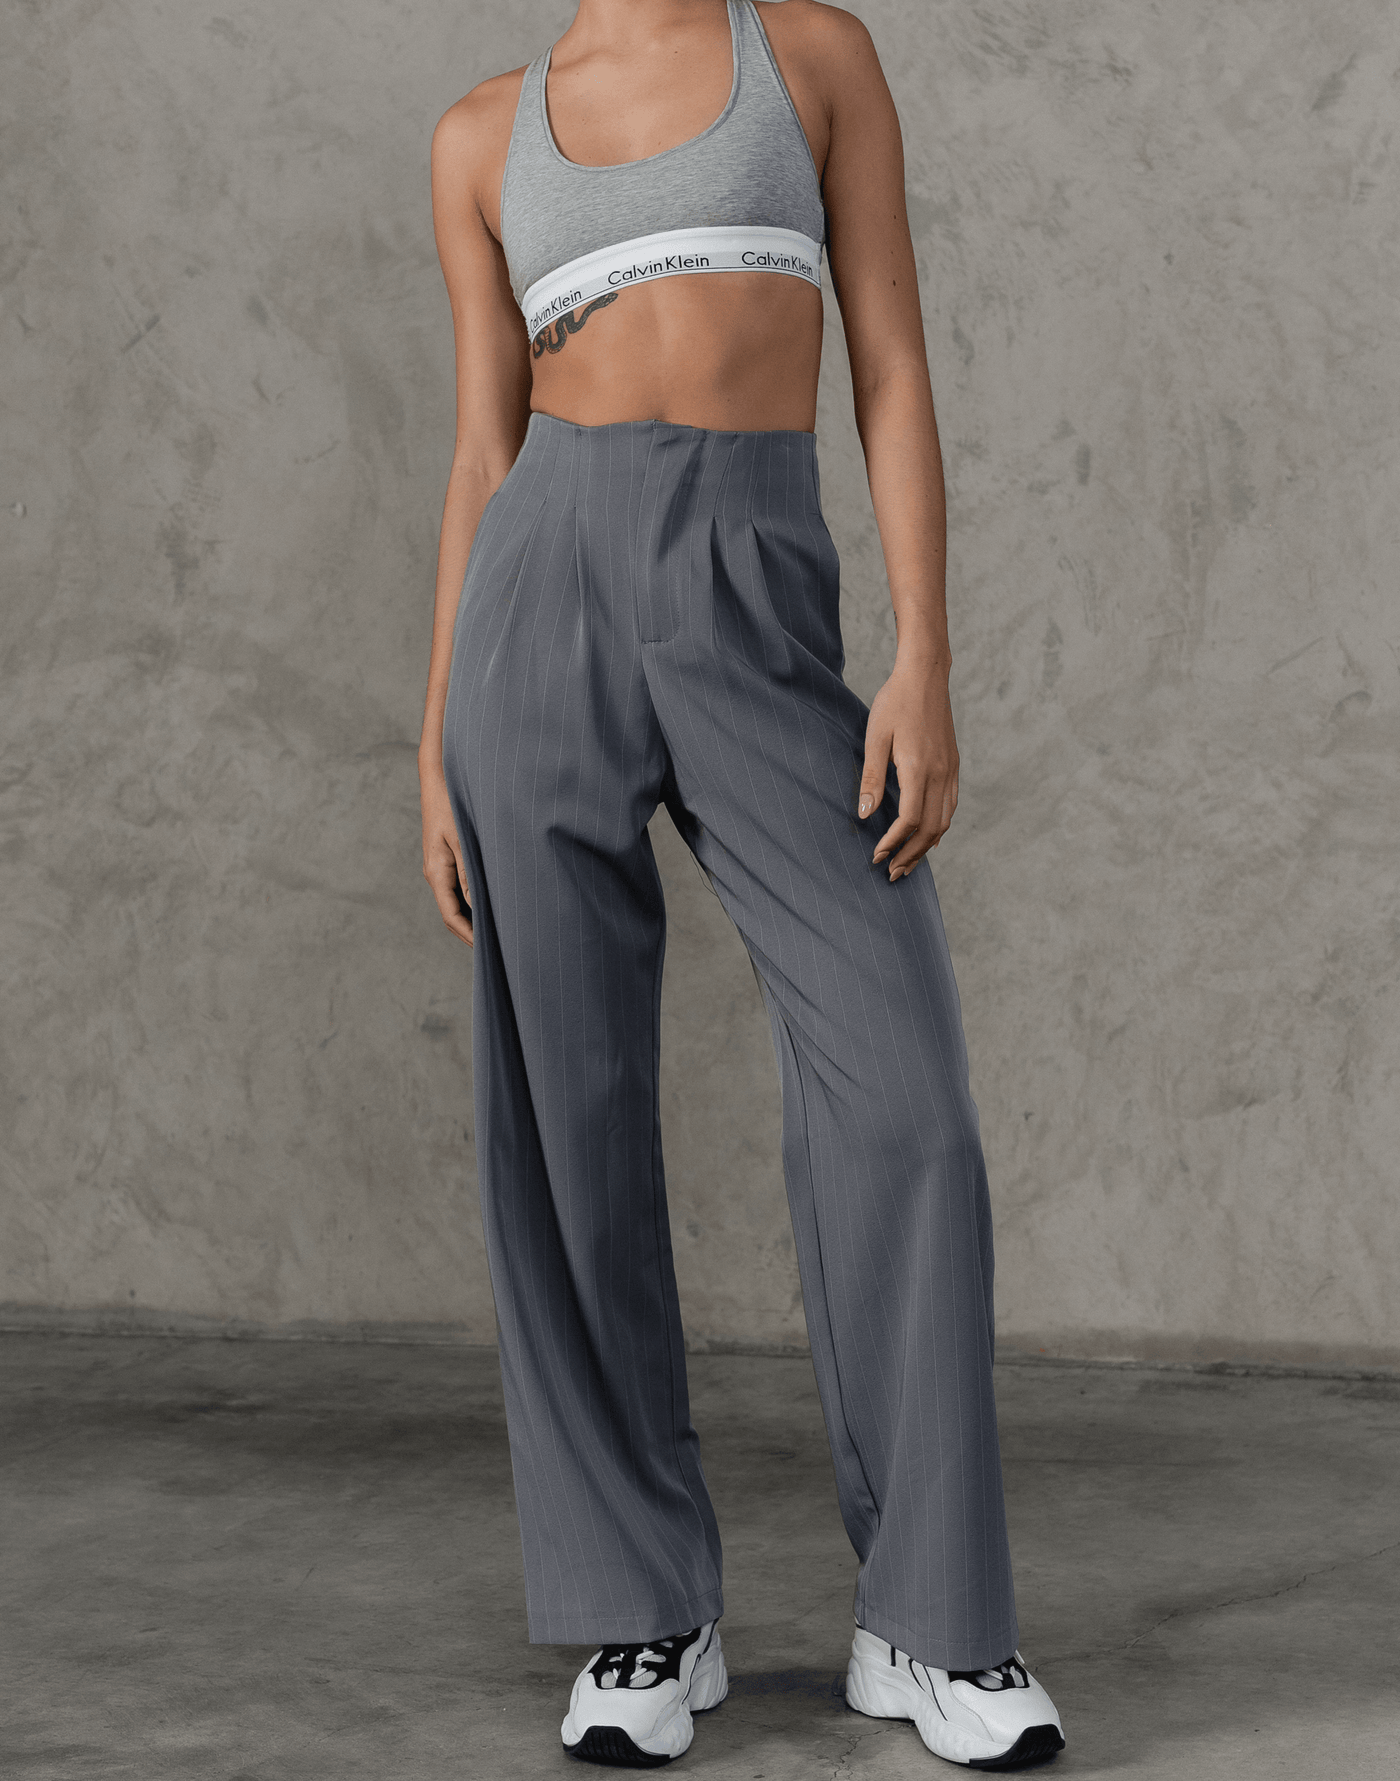 New Girl Pants (Grey Pinstripe) - Grey Pinstripe High Waisted Pants - Women's Pants - Charcoal Clothing